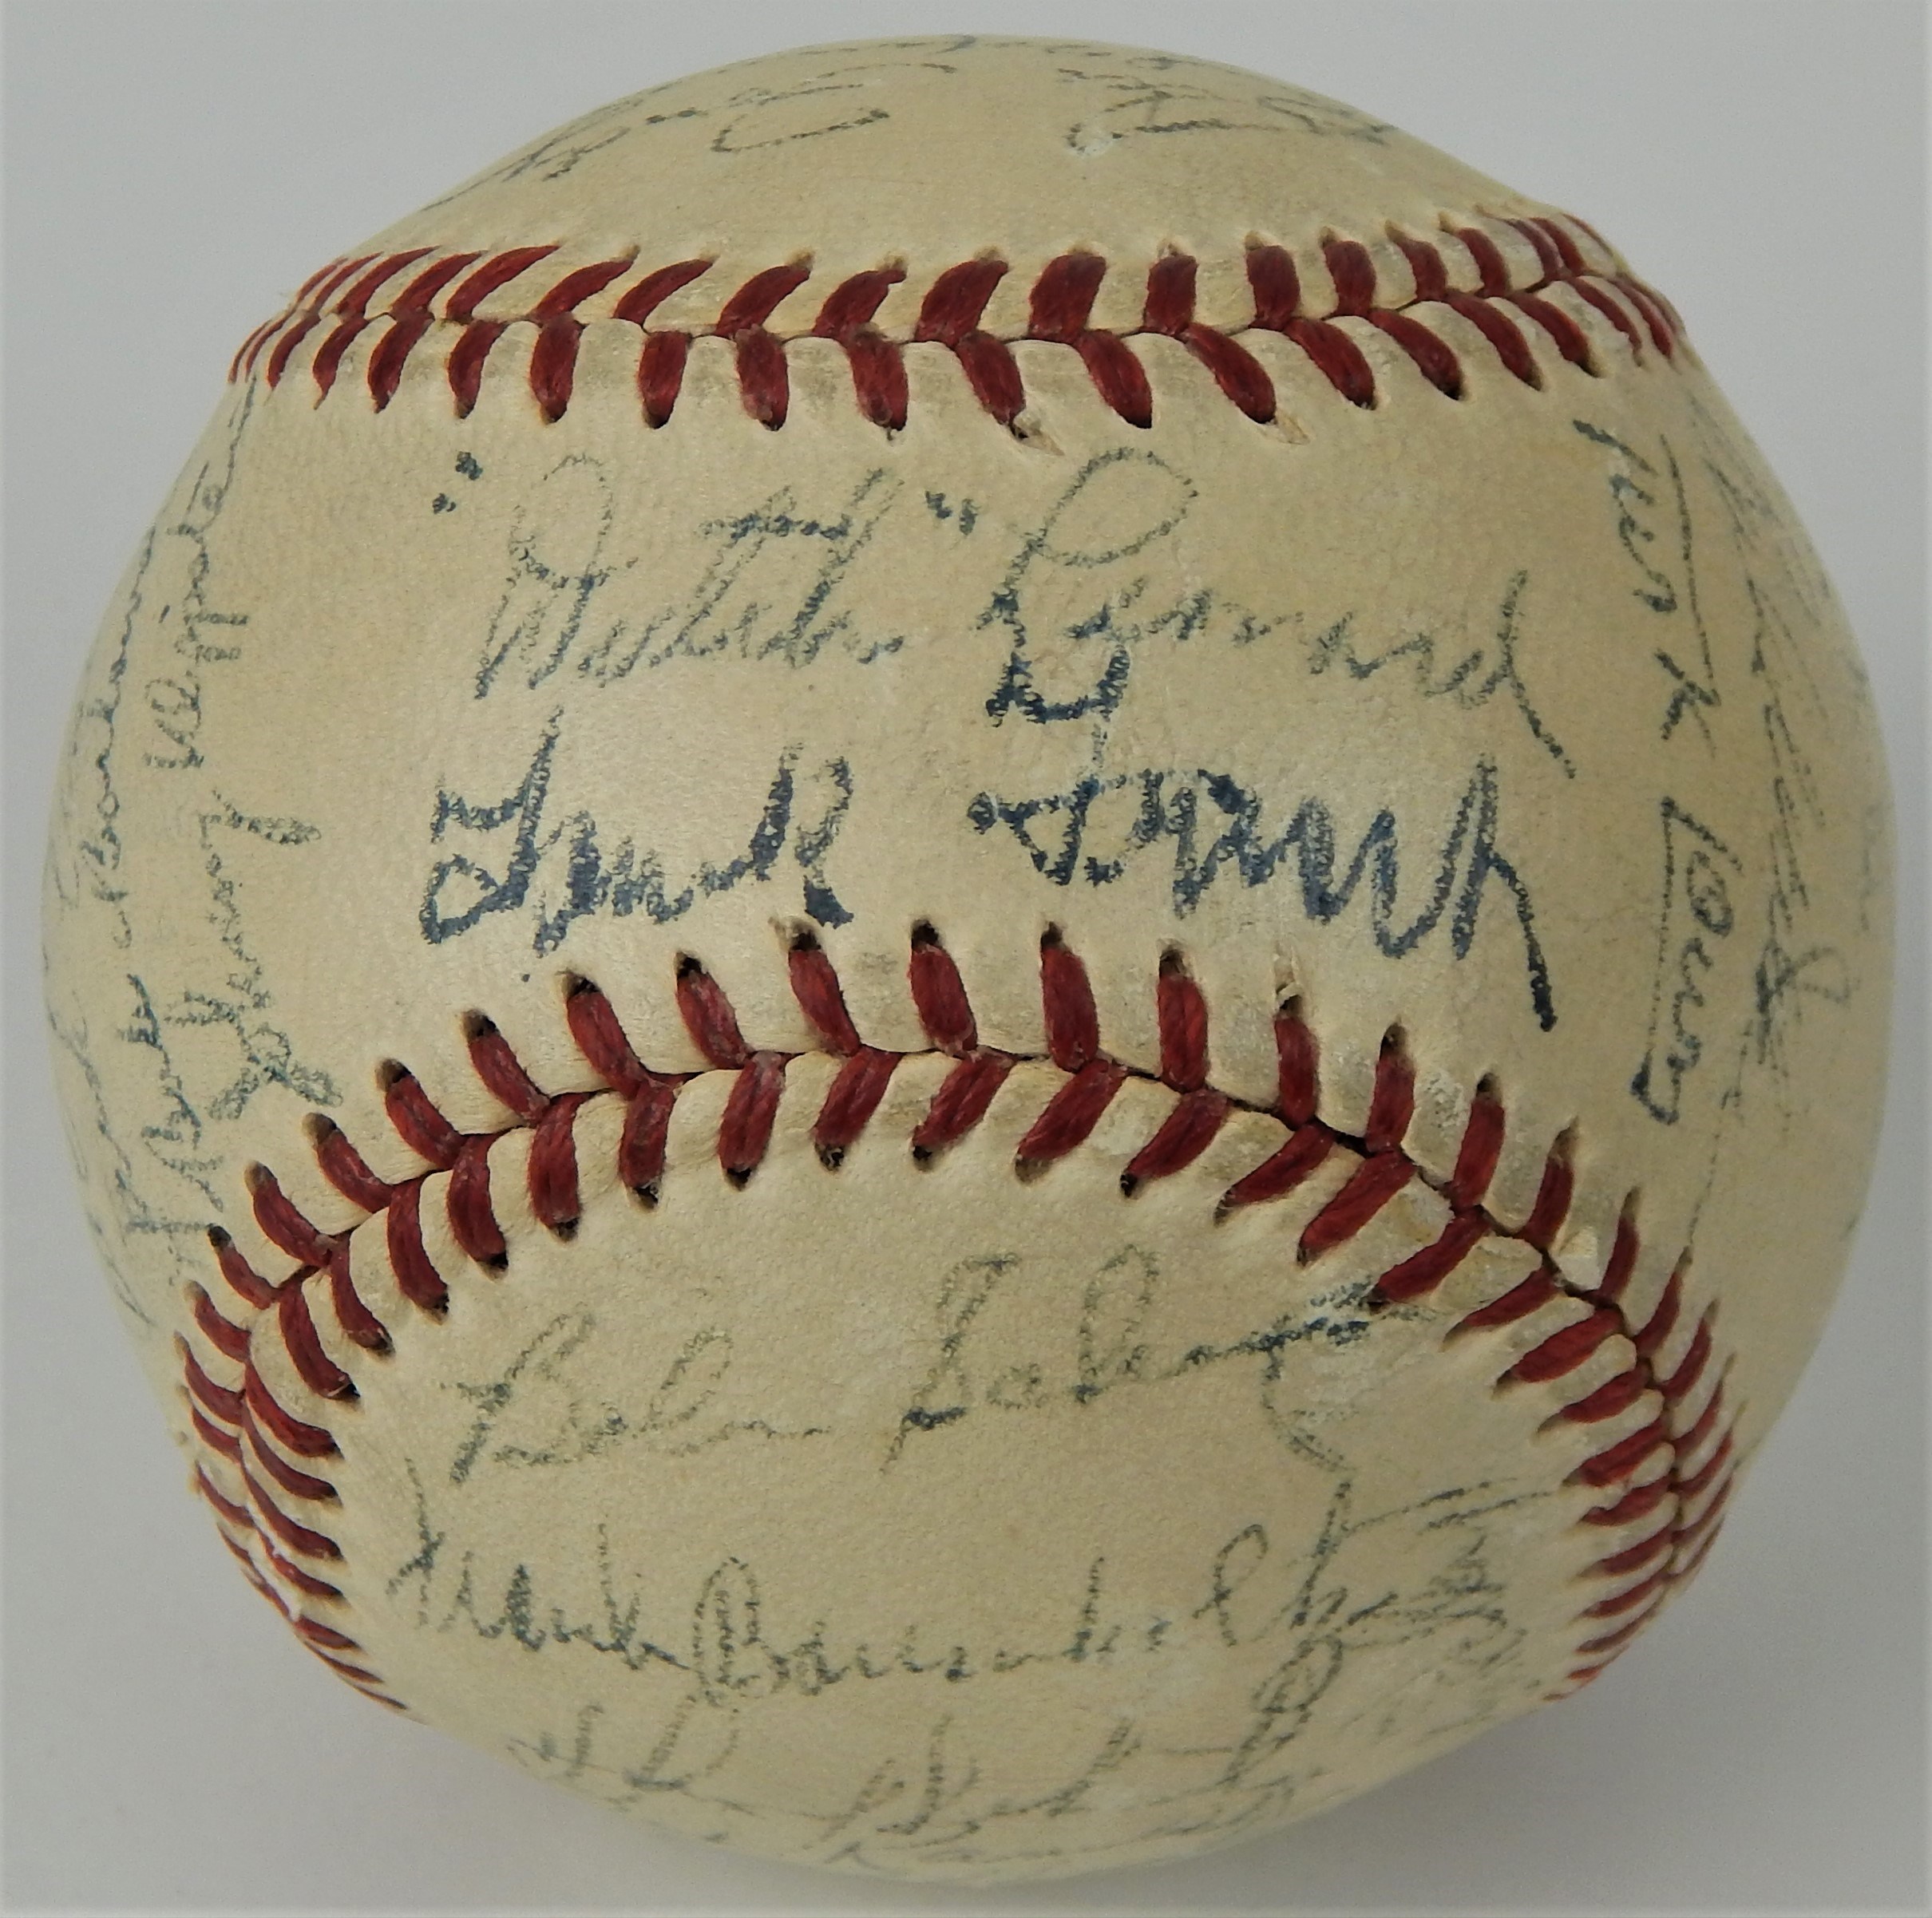 - 1951 Chicago Cubs Team Signed Baseball